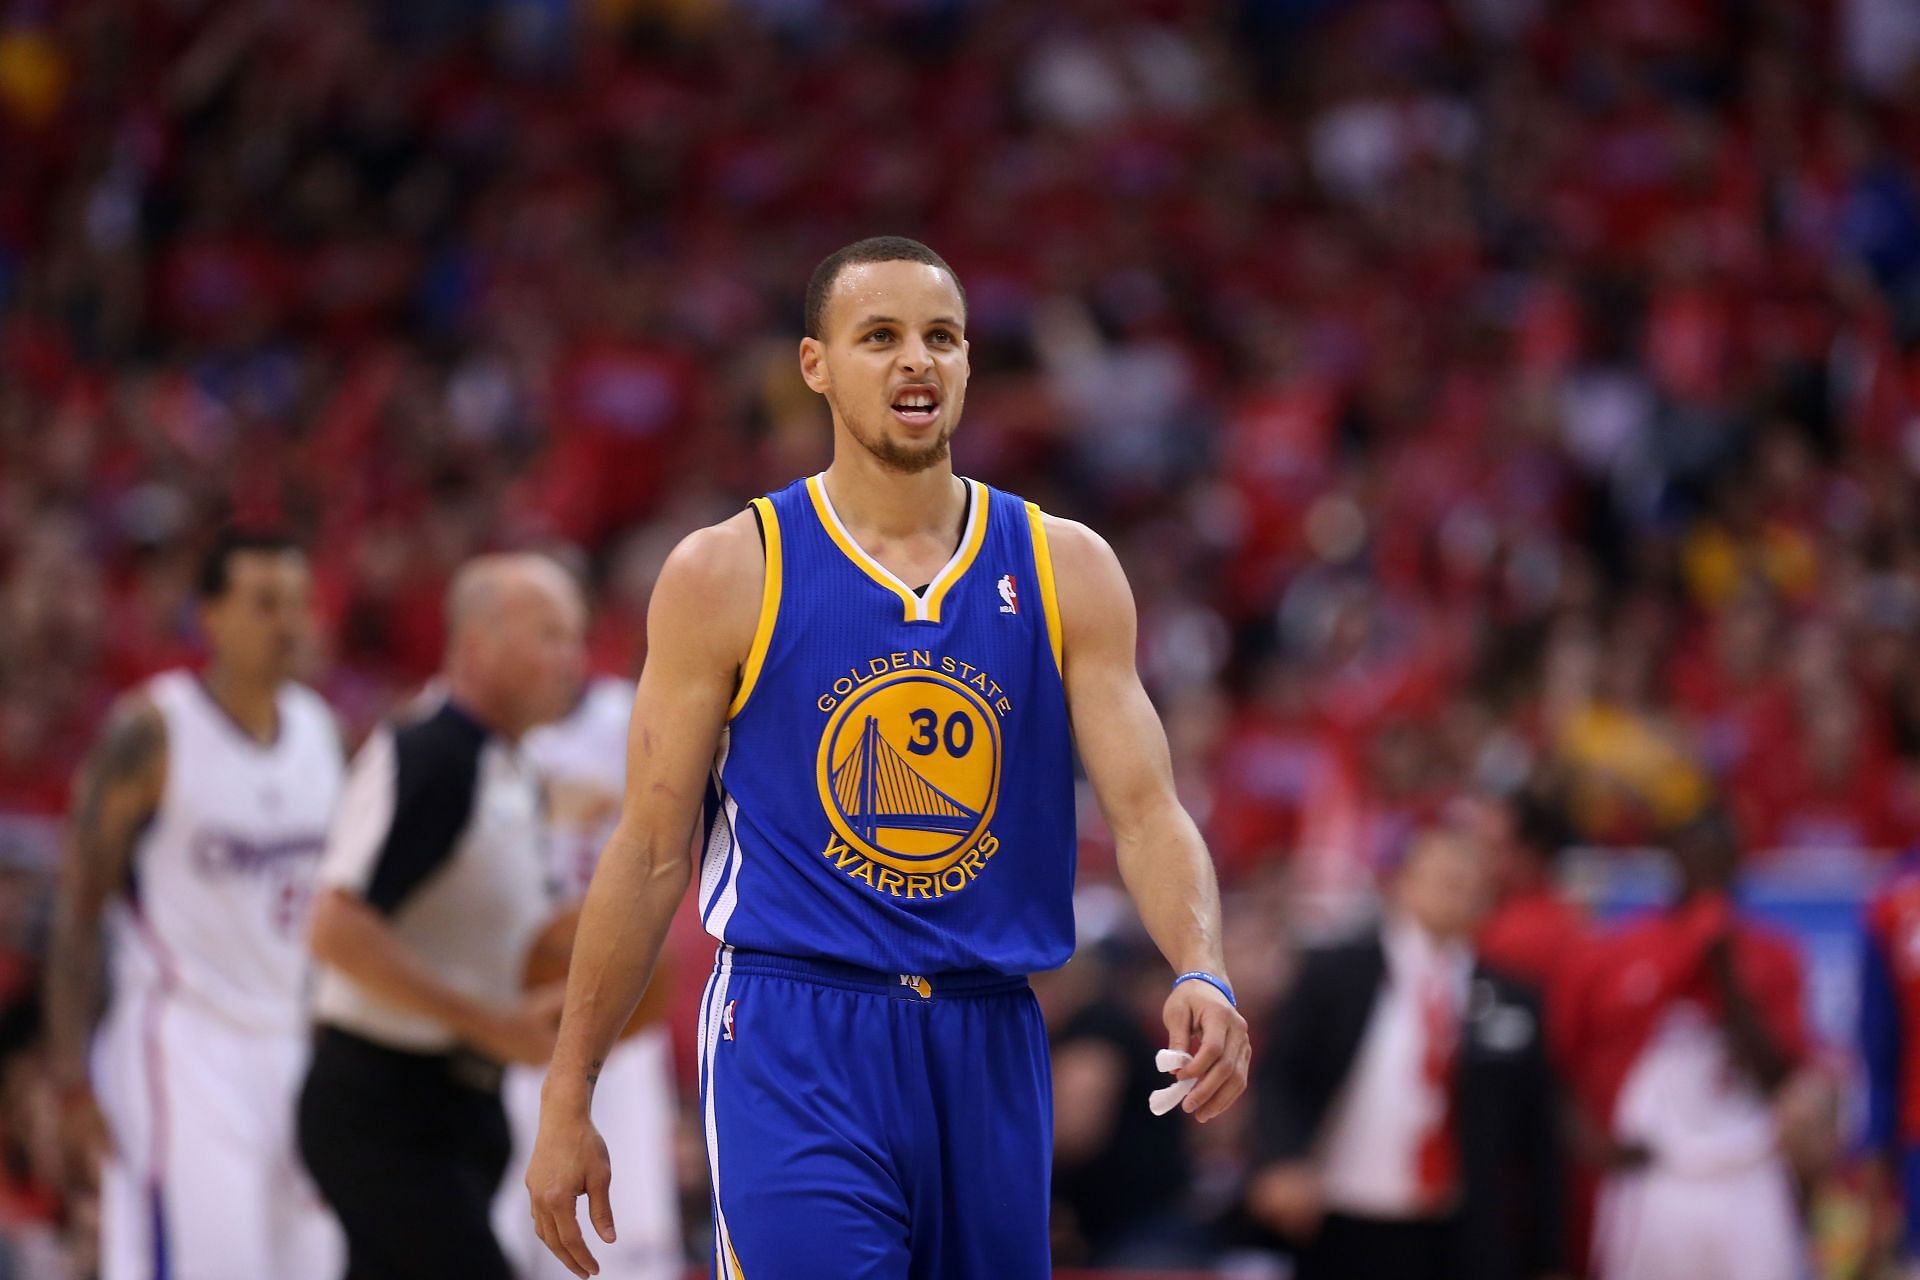 Warriors superstar Stephen Curry reveals his Michael Jordan-led NBA  all-time starting five